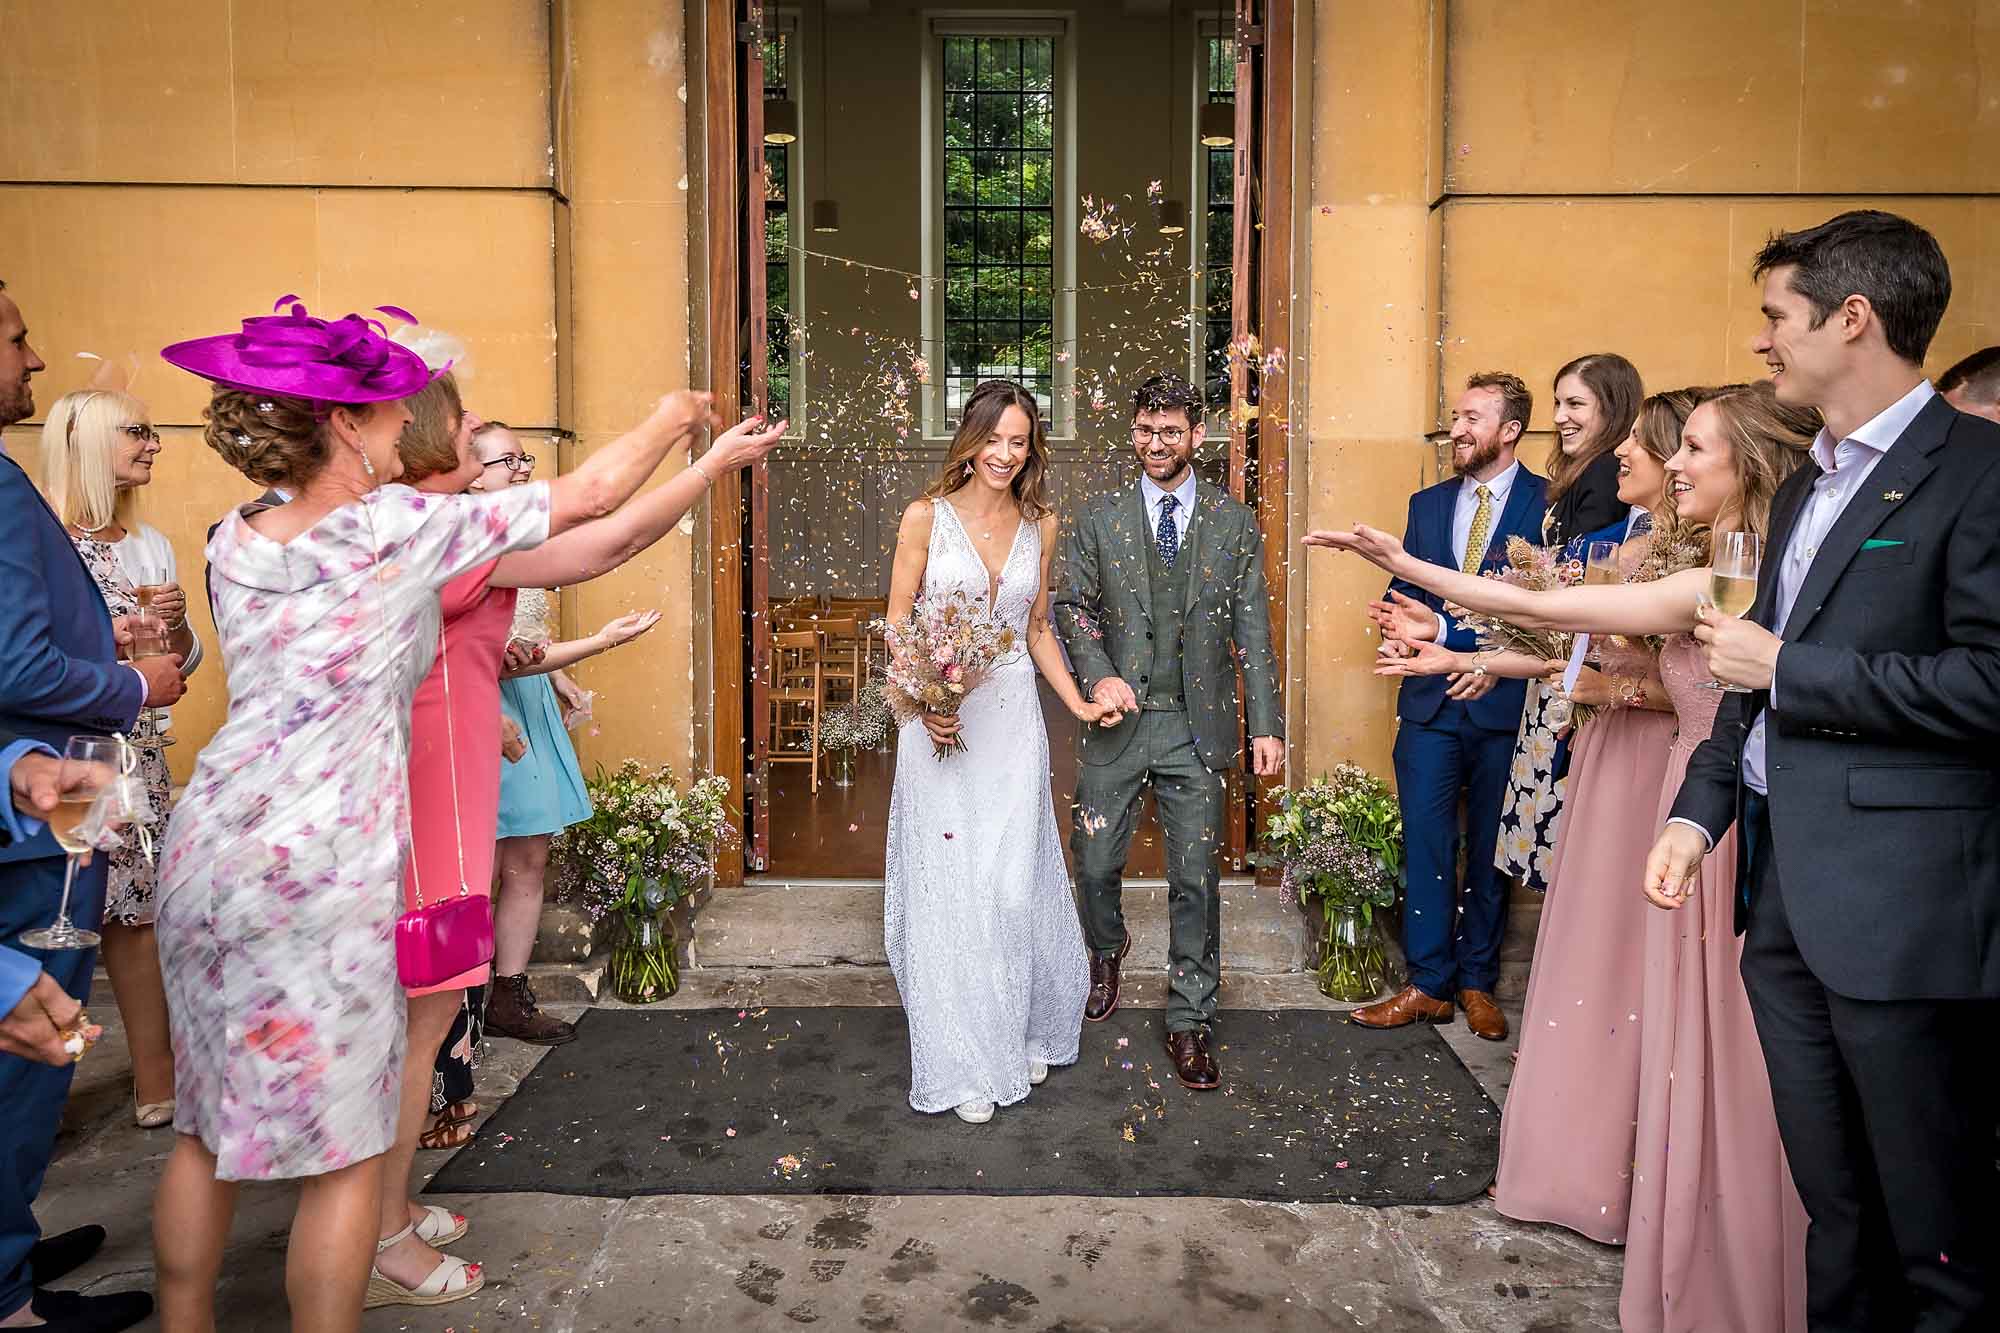 Wedding confetti shower as couple exit the Spielman Centre at Arnos Vale